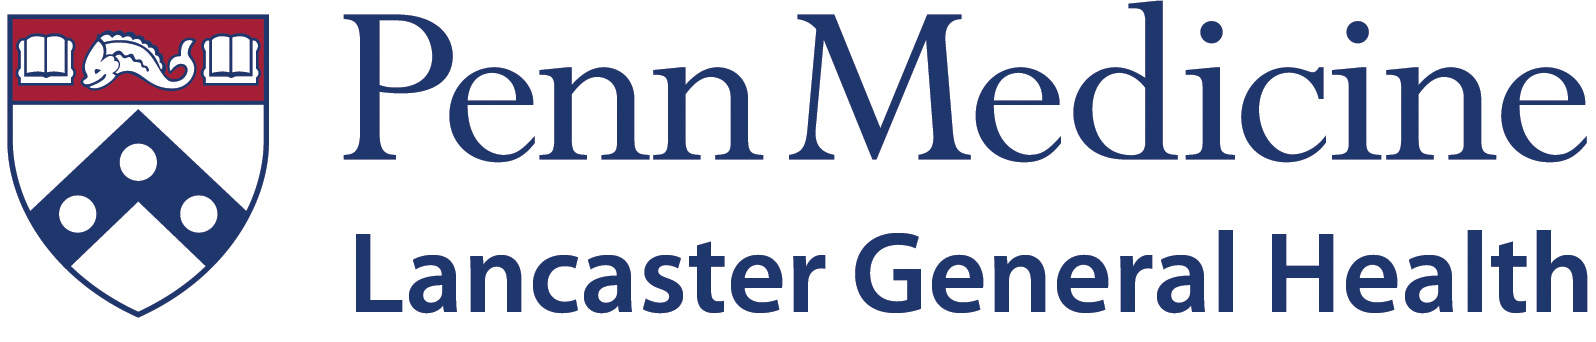 Penn medicine lancaster general health logo.